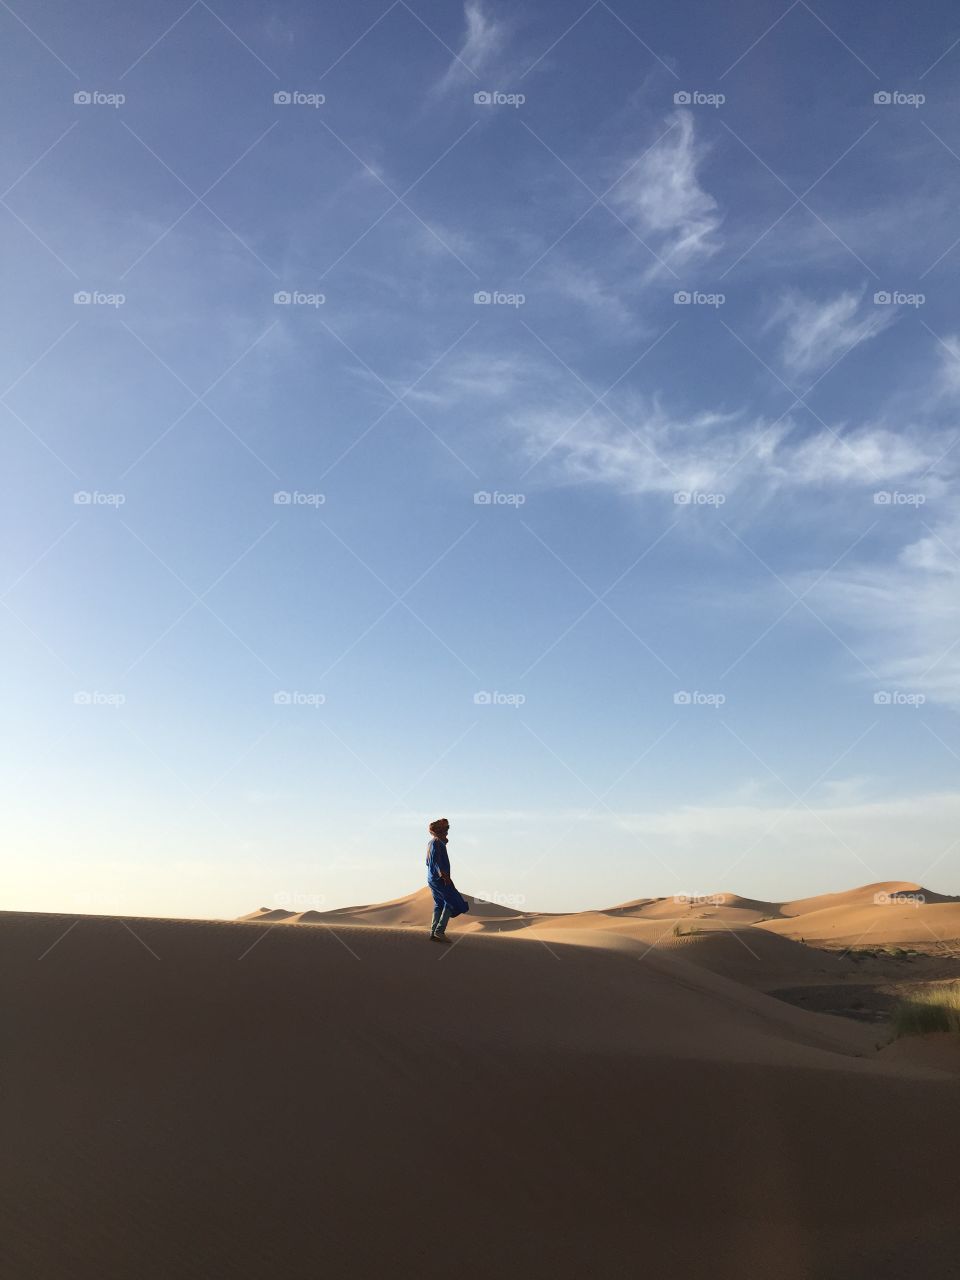 exploring the Sahara dessert

